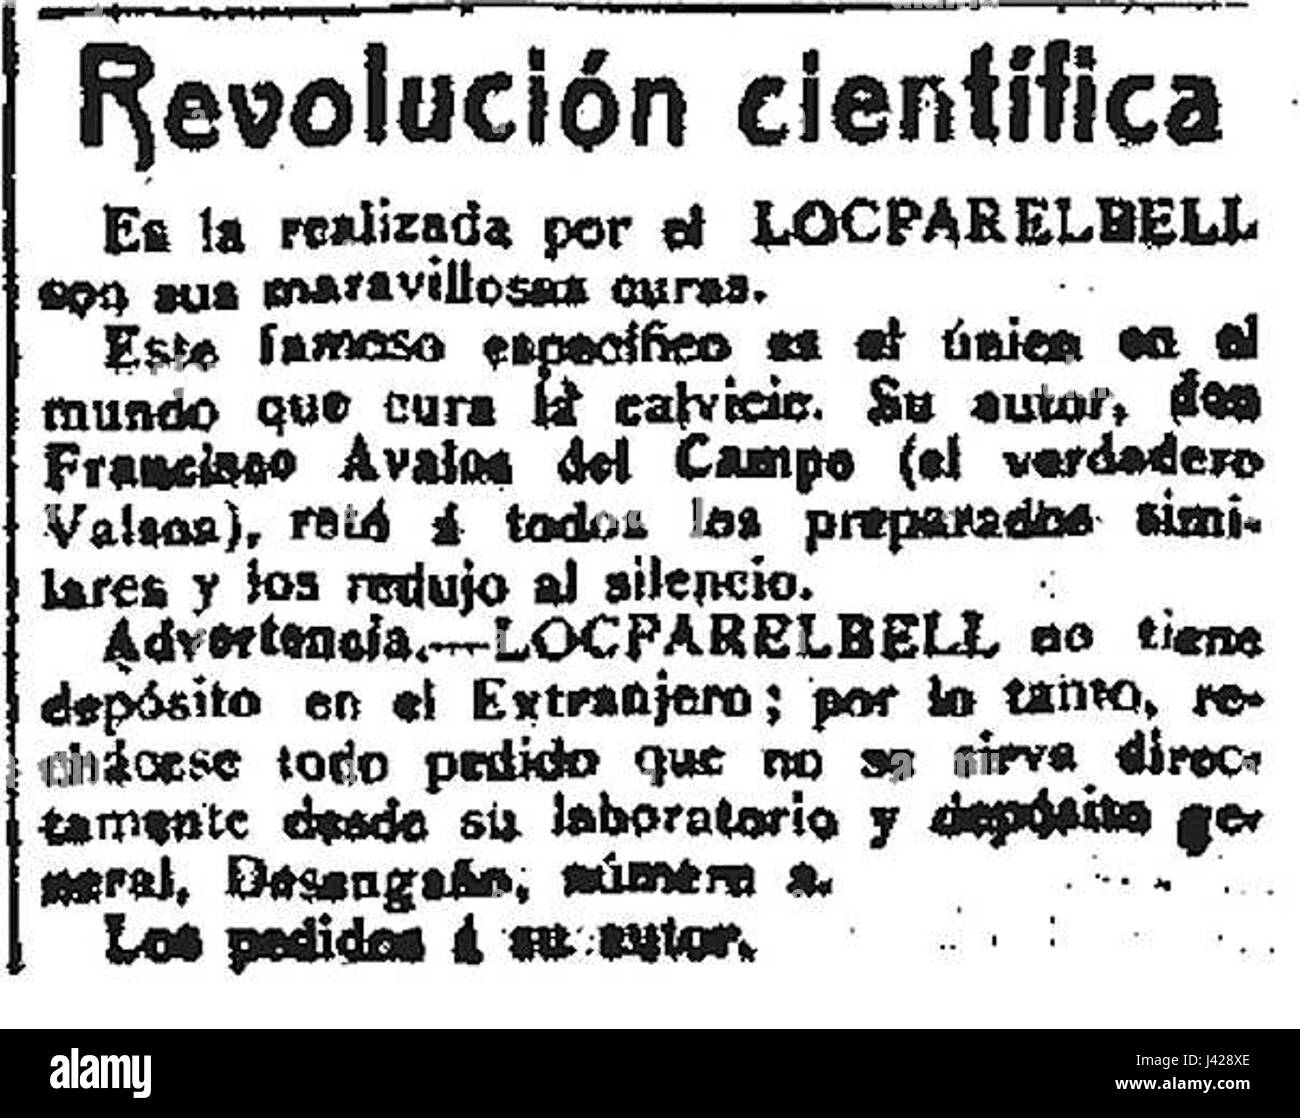 Locparelbell 1911 03 22 revolucion cientifica Stock Photo